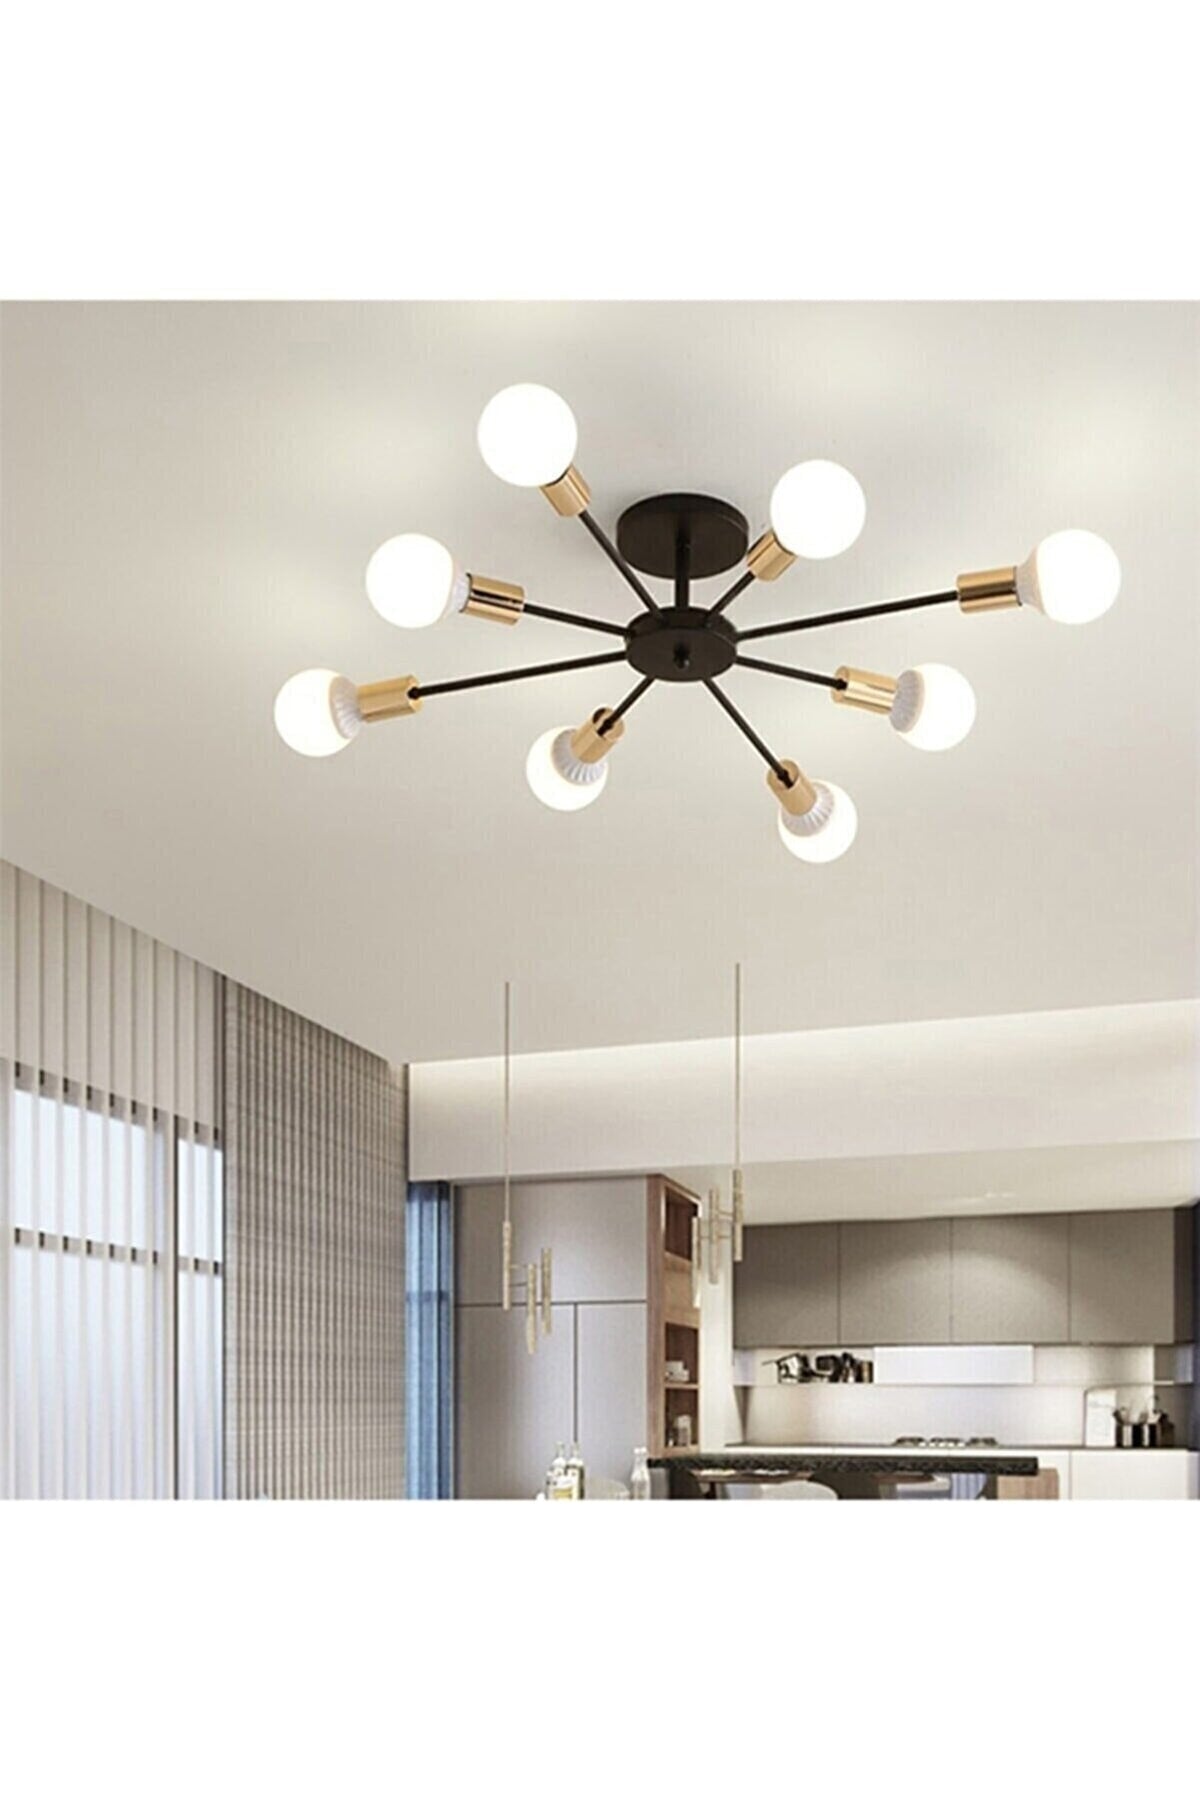 Yıldız Living Room - Kitchen - Cafe Model Ceiling Plate 8-Piece Chandelier (WITHOUT BULB)